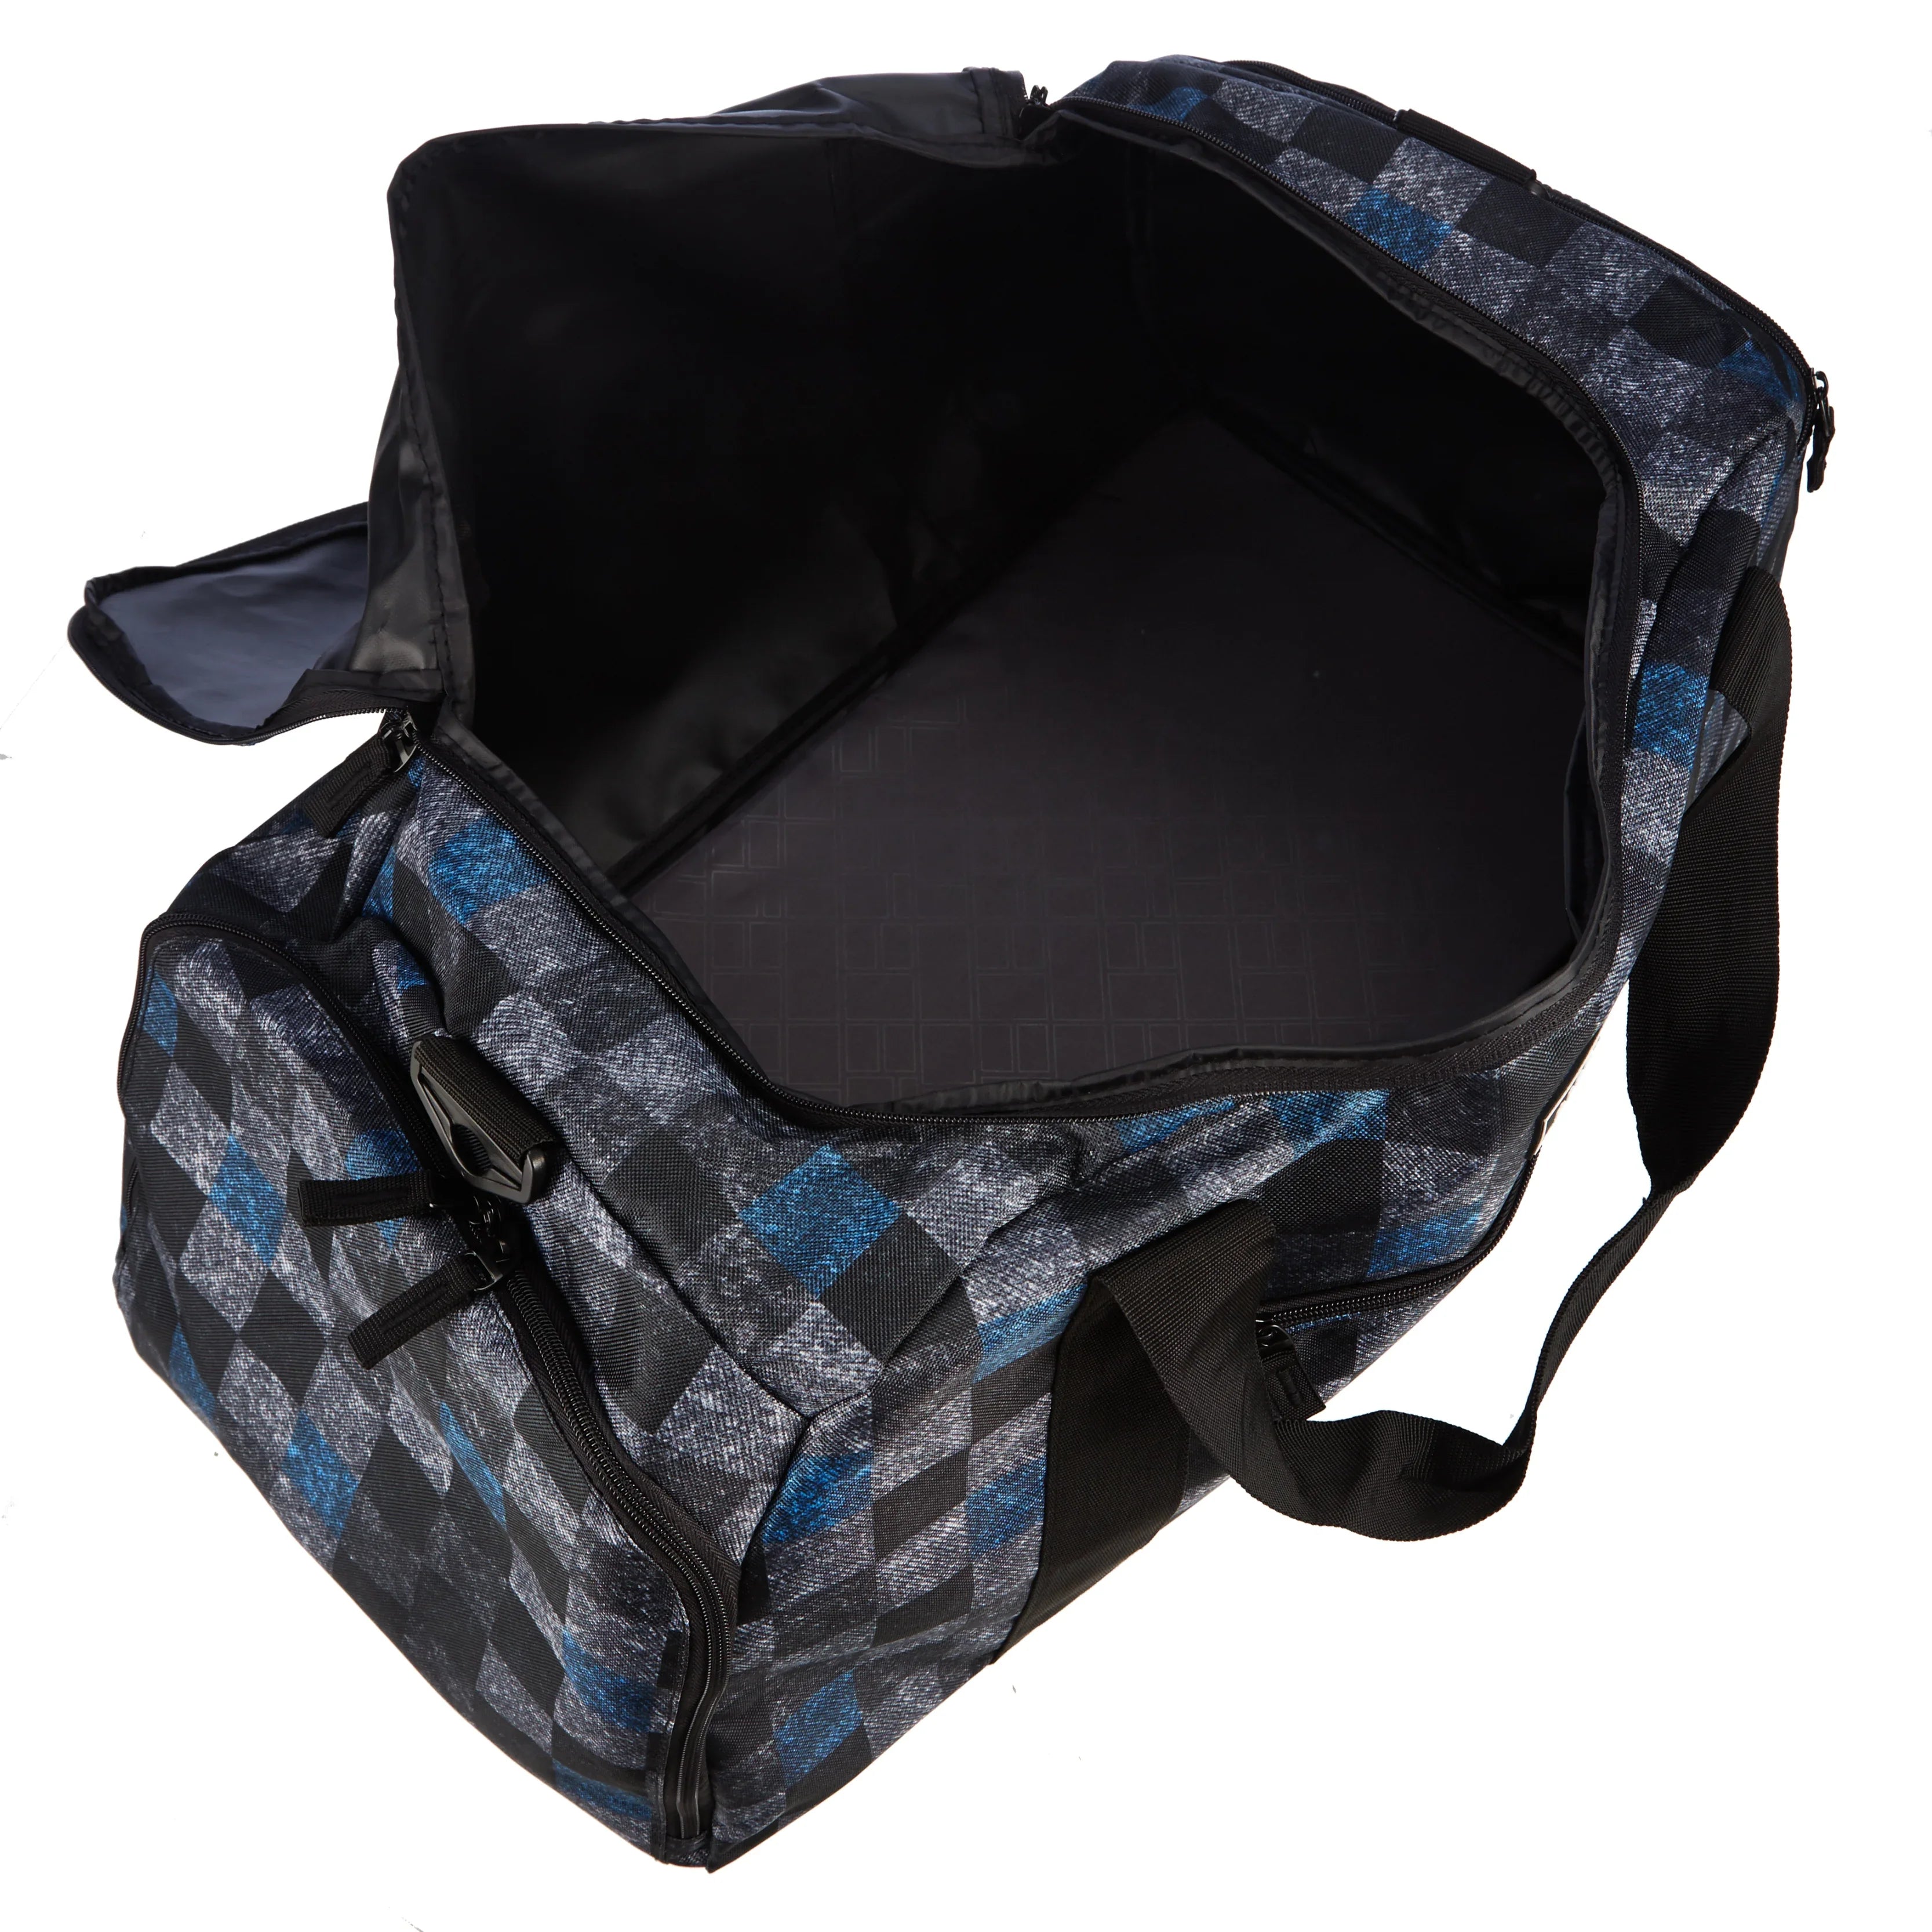 koffer-direkt.de Two Travel II Travel bag 50 cm - blue stripe